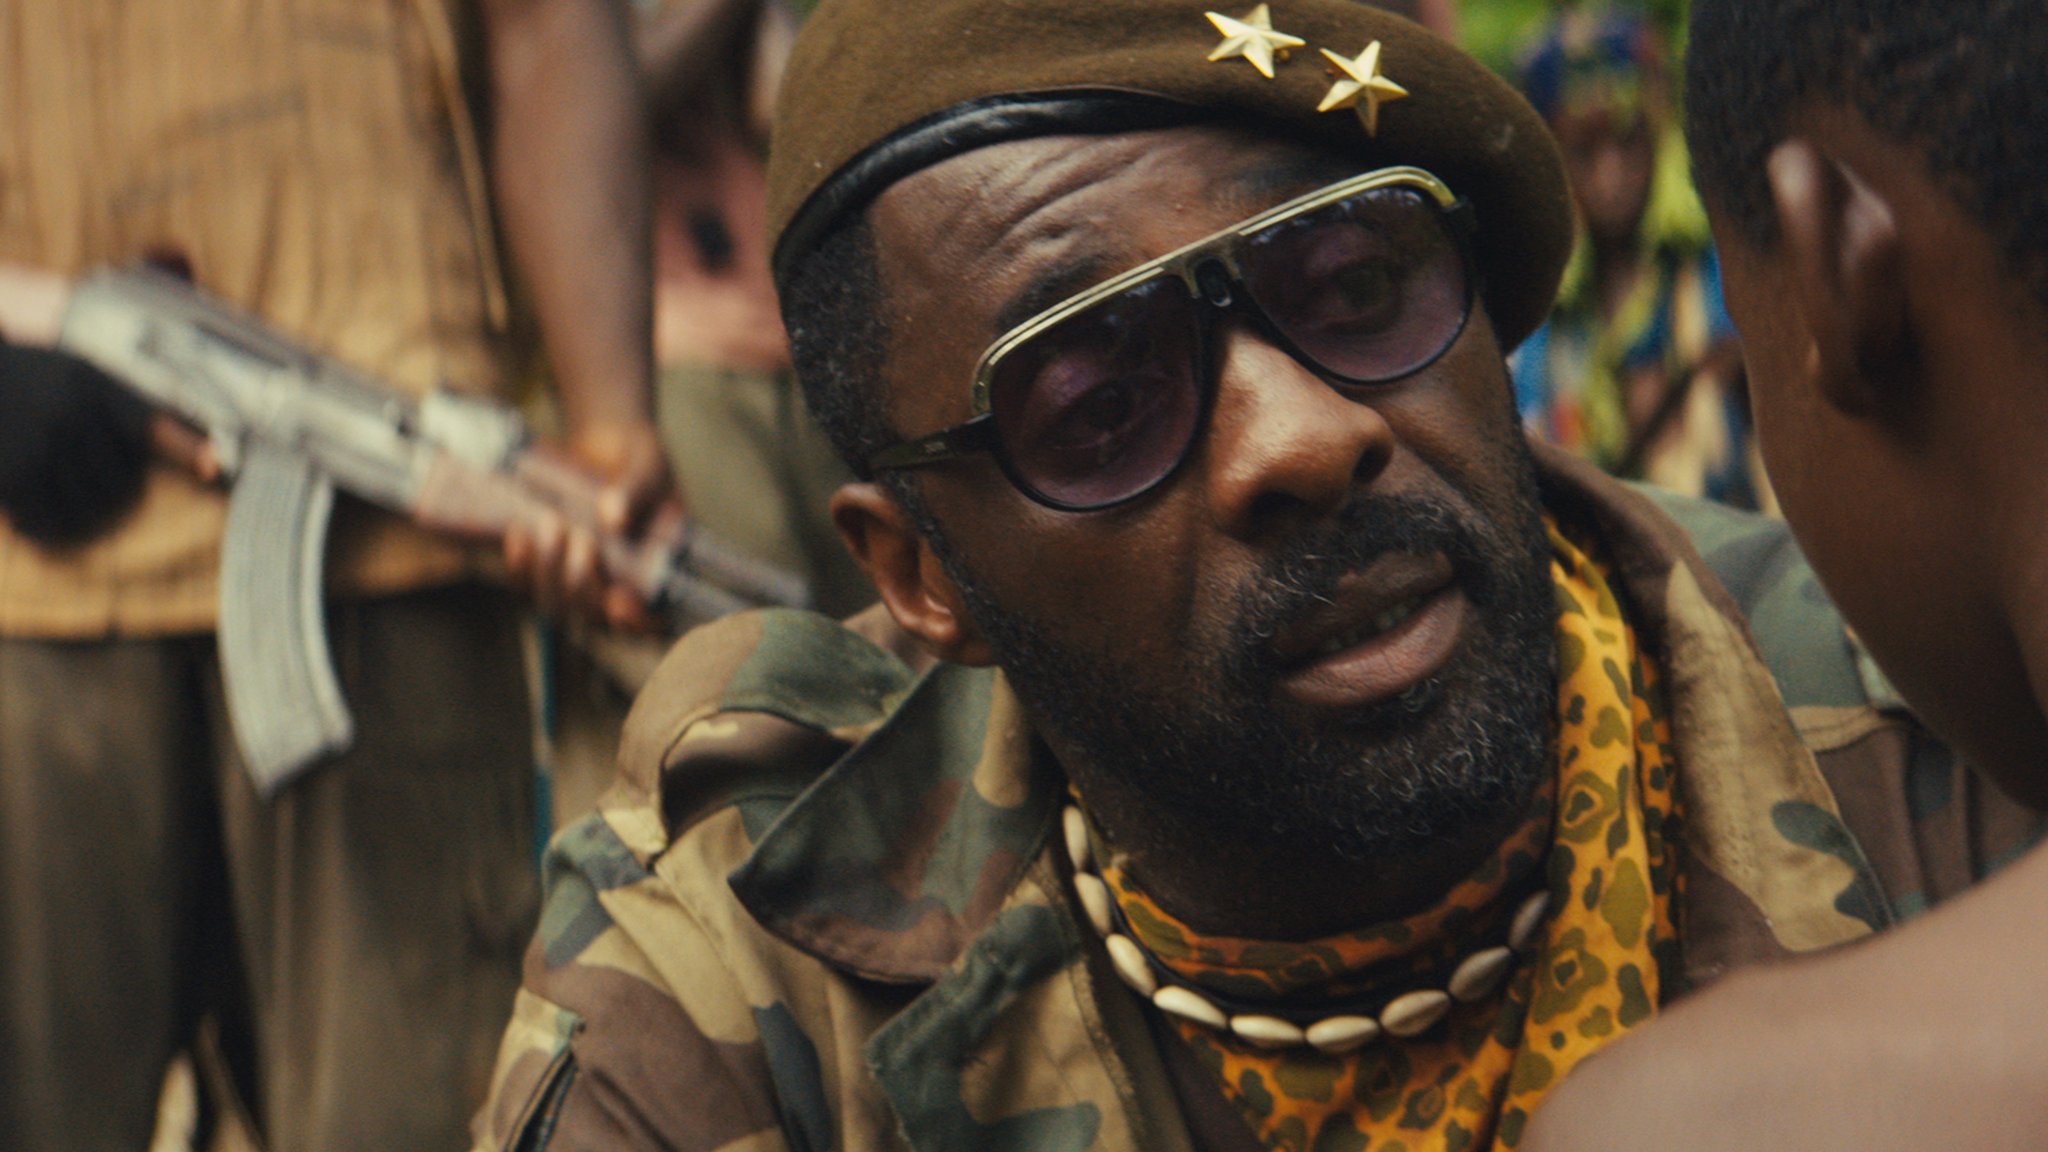 Idris Elba takes on Beastly African warfare role